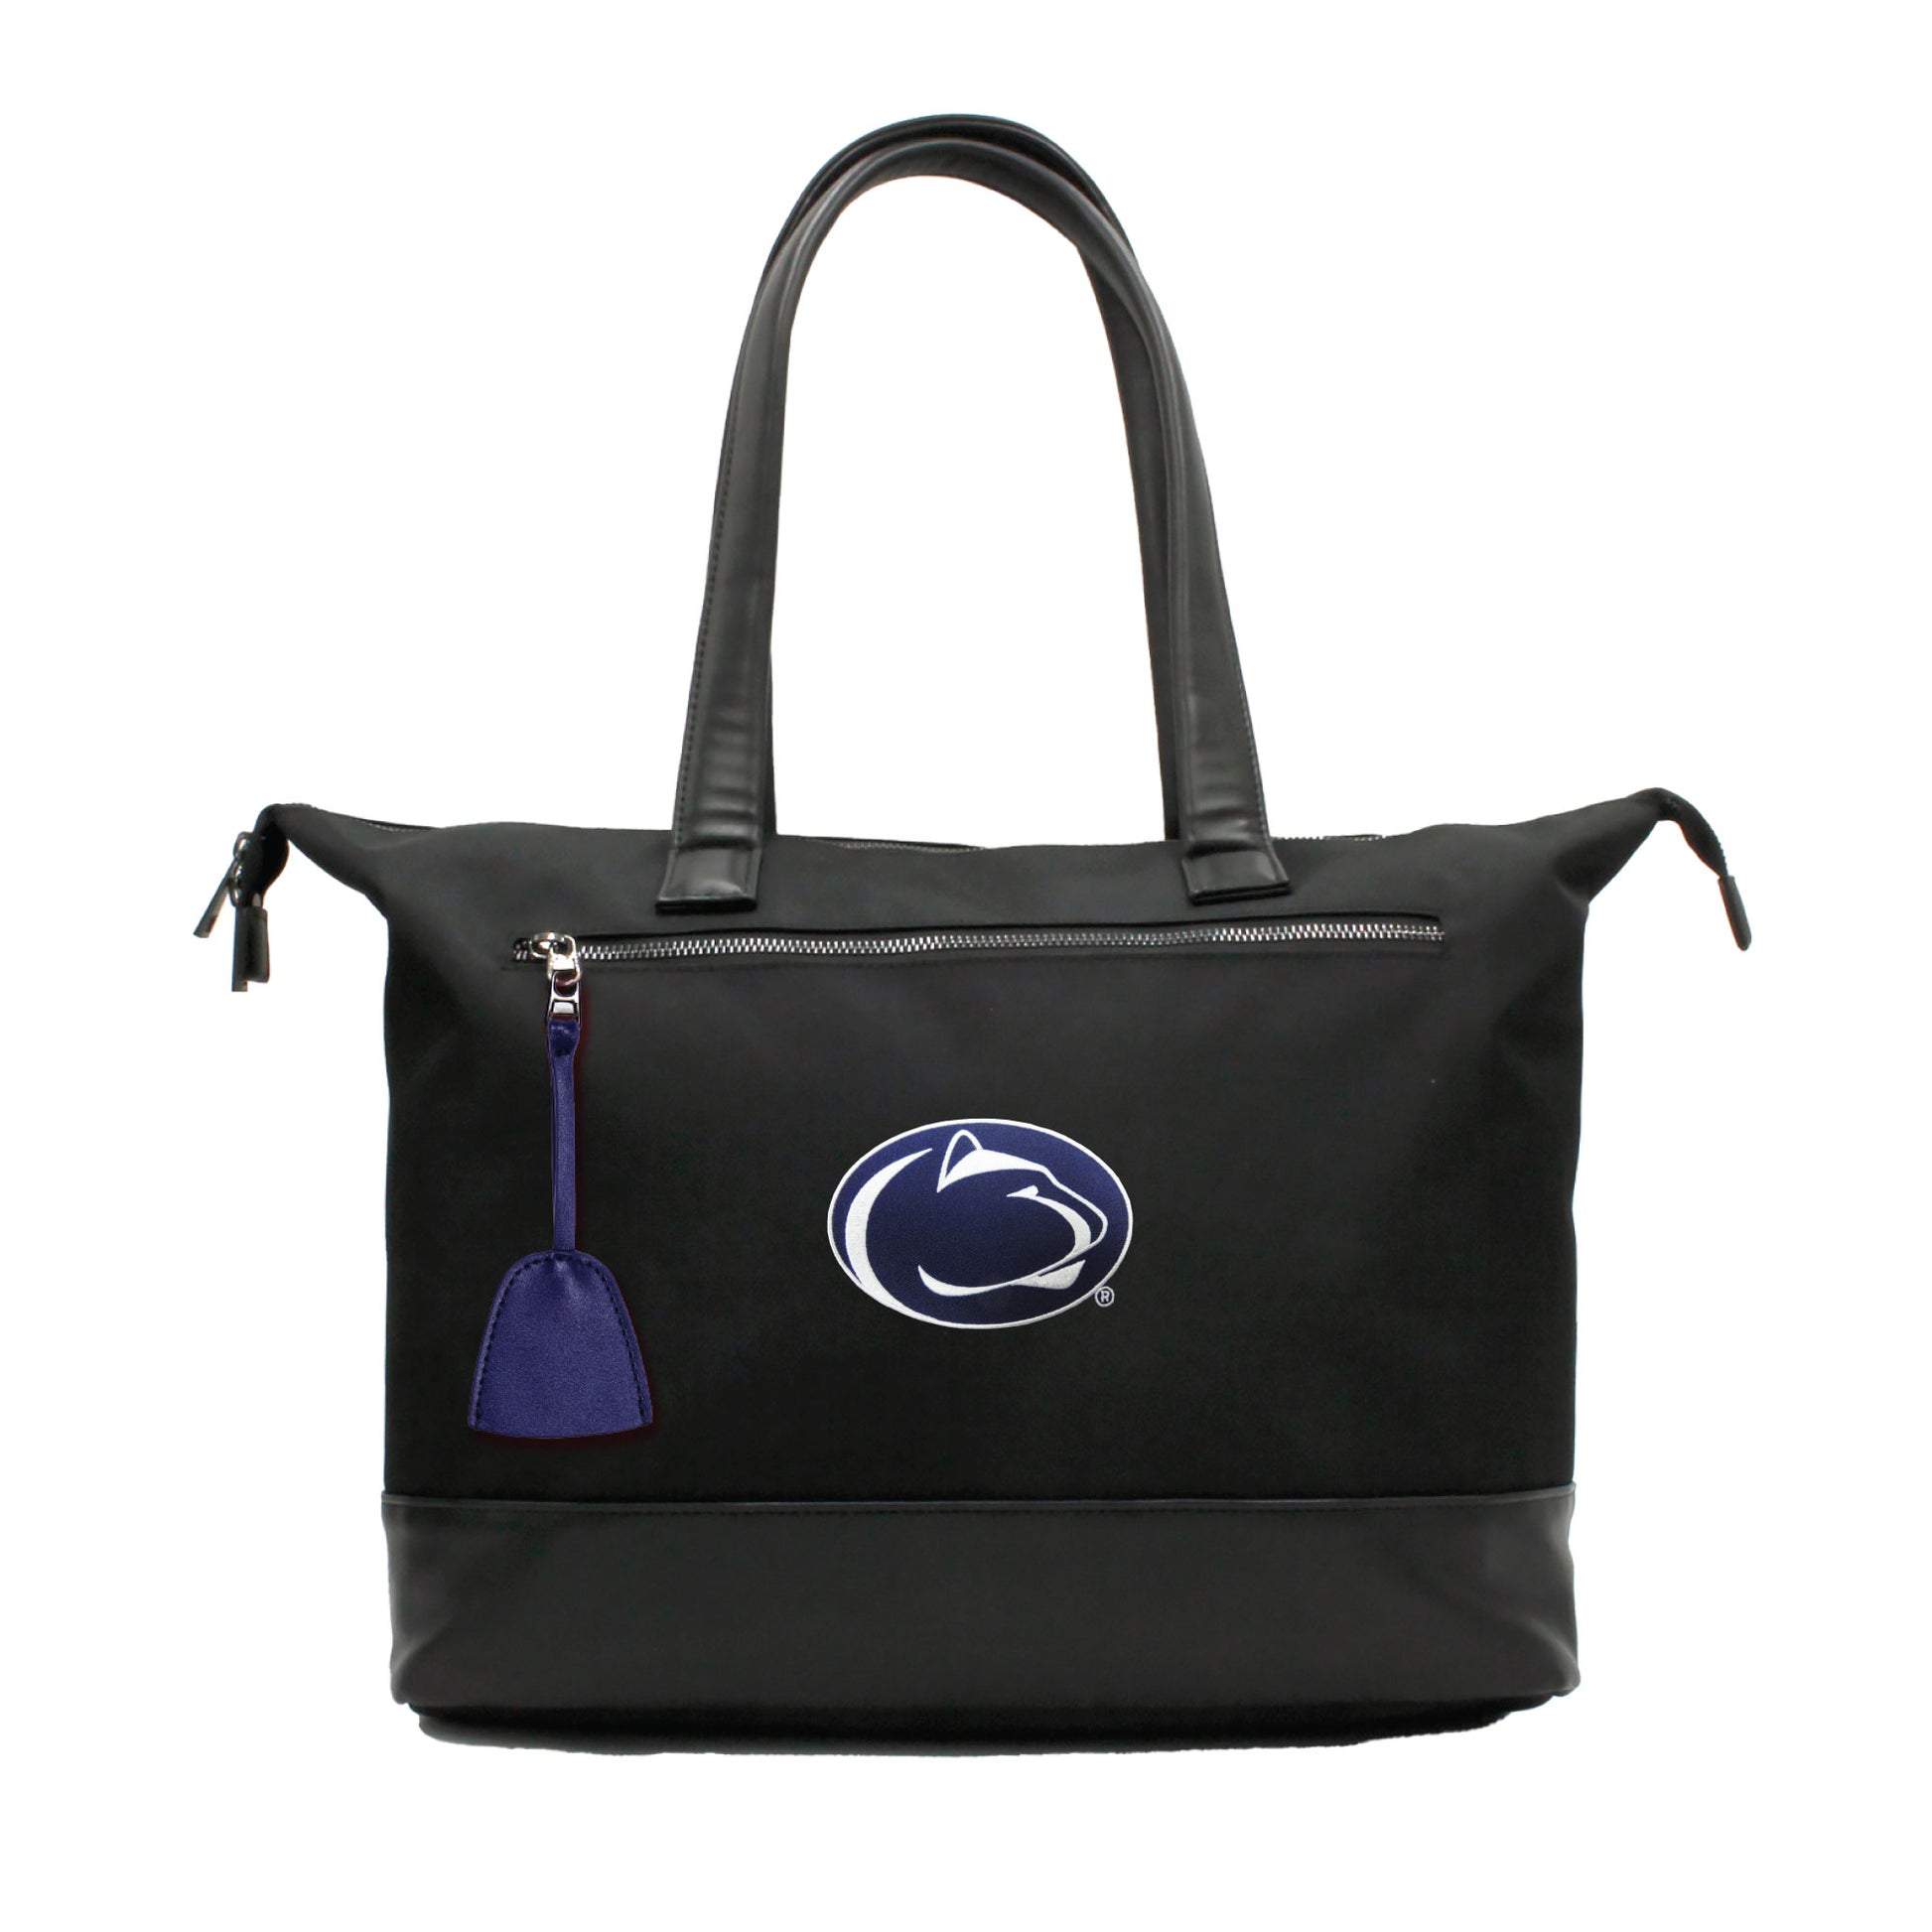 Penn State Nittany Lions Premium Laptop Tote Bag